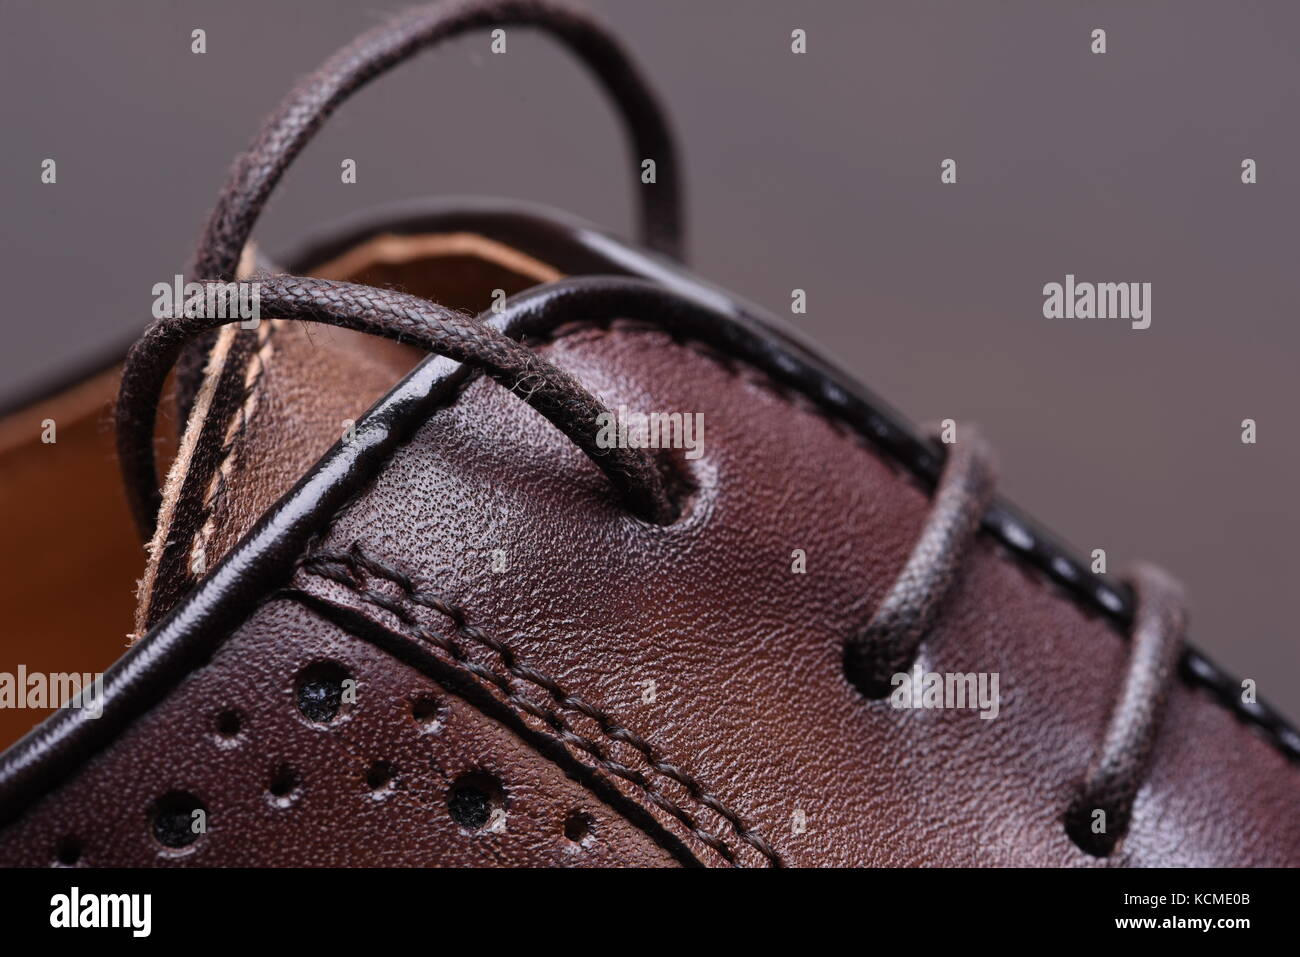 Leather shoe closeup Stock Photo